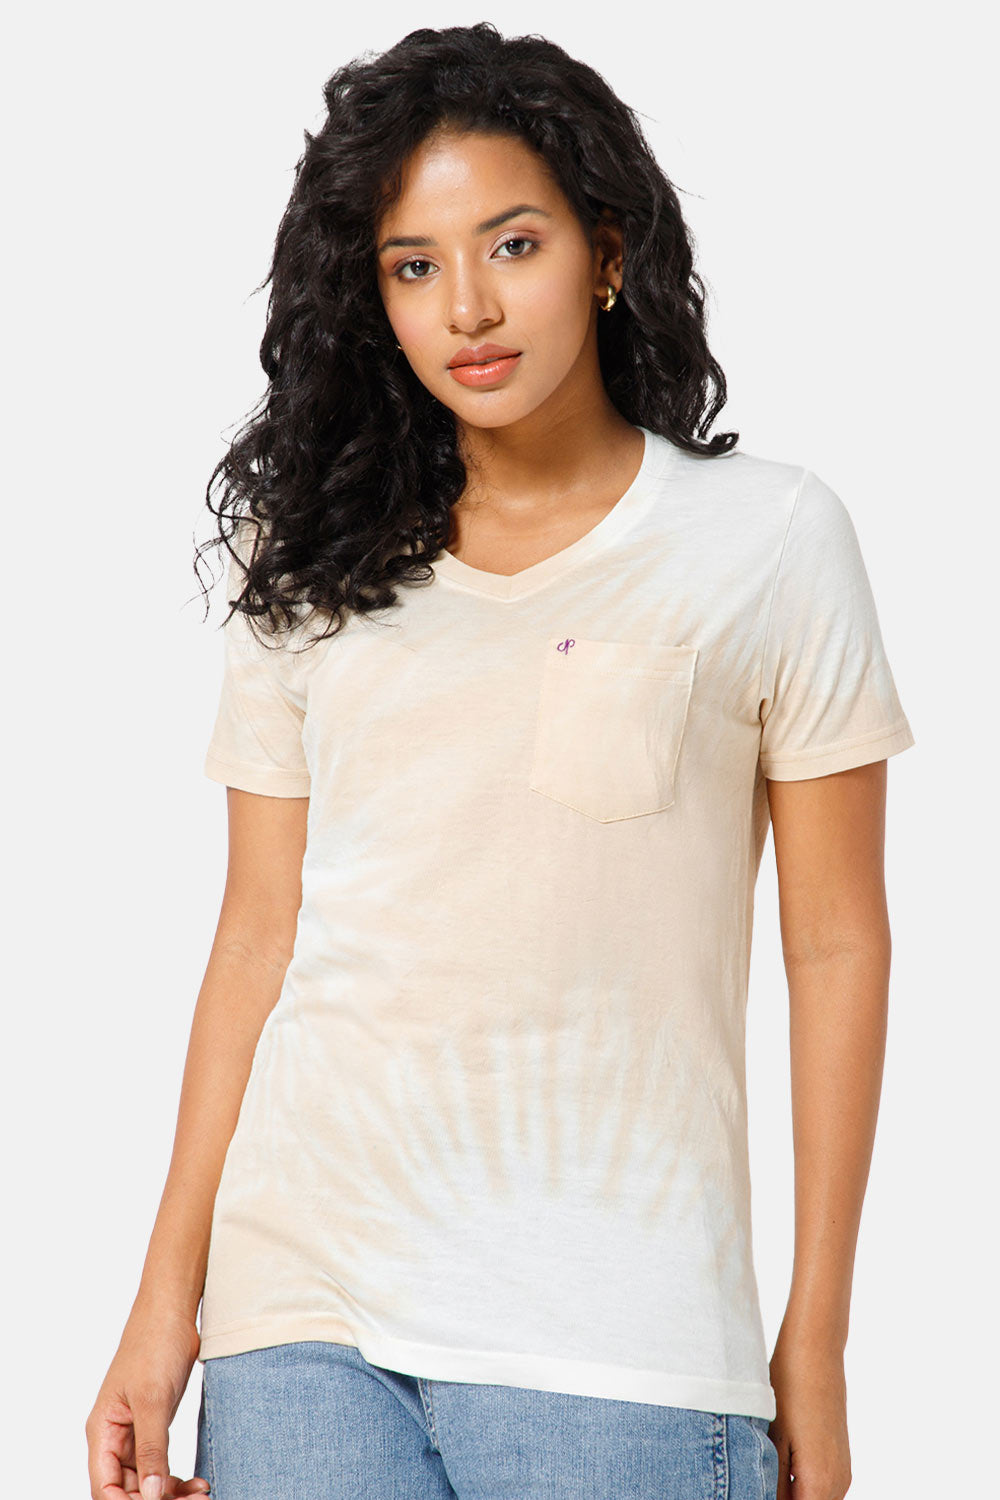 Jusperf Women Half Sleeve V-Neck T-shirt  - Light Brown - SD13